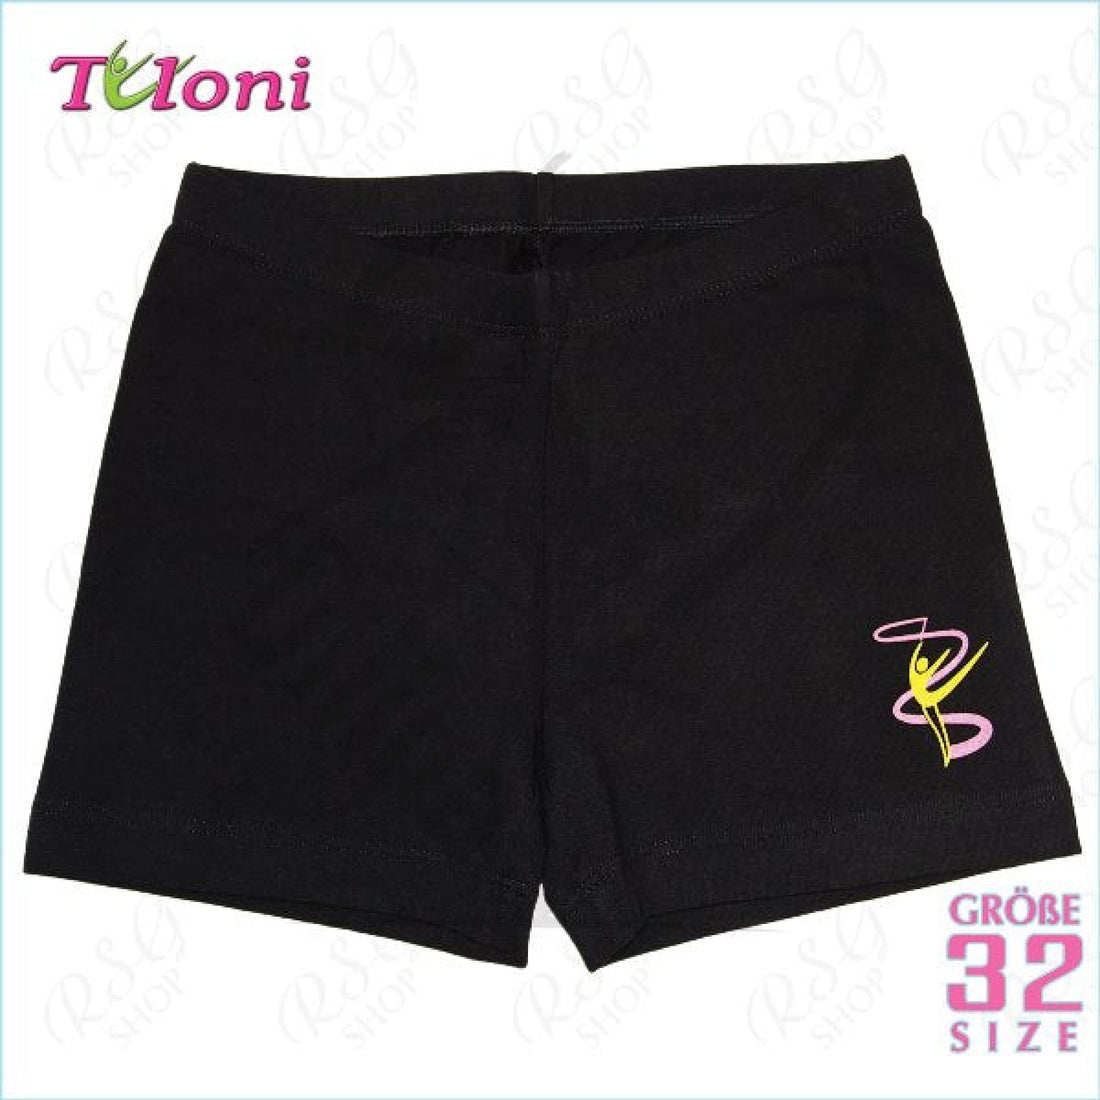 Tuloni Shorts Black With Gymnasts Emblem 32 (116-122)